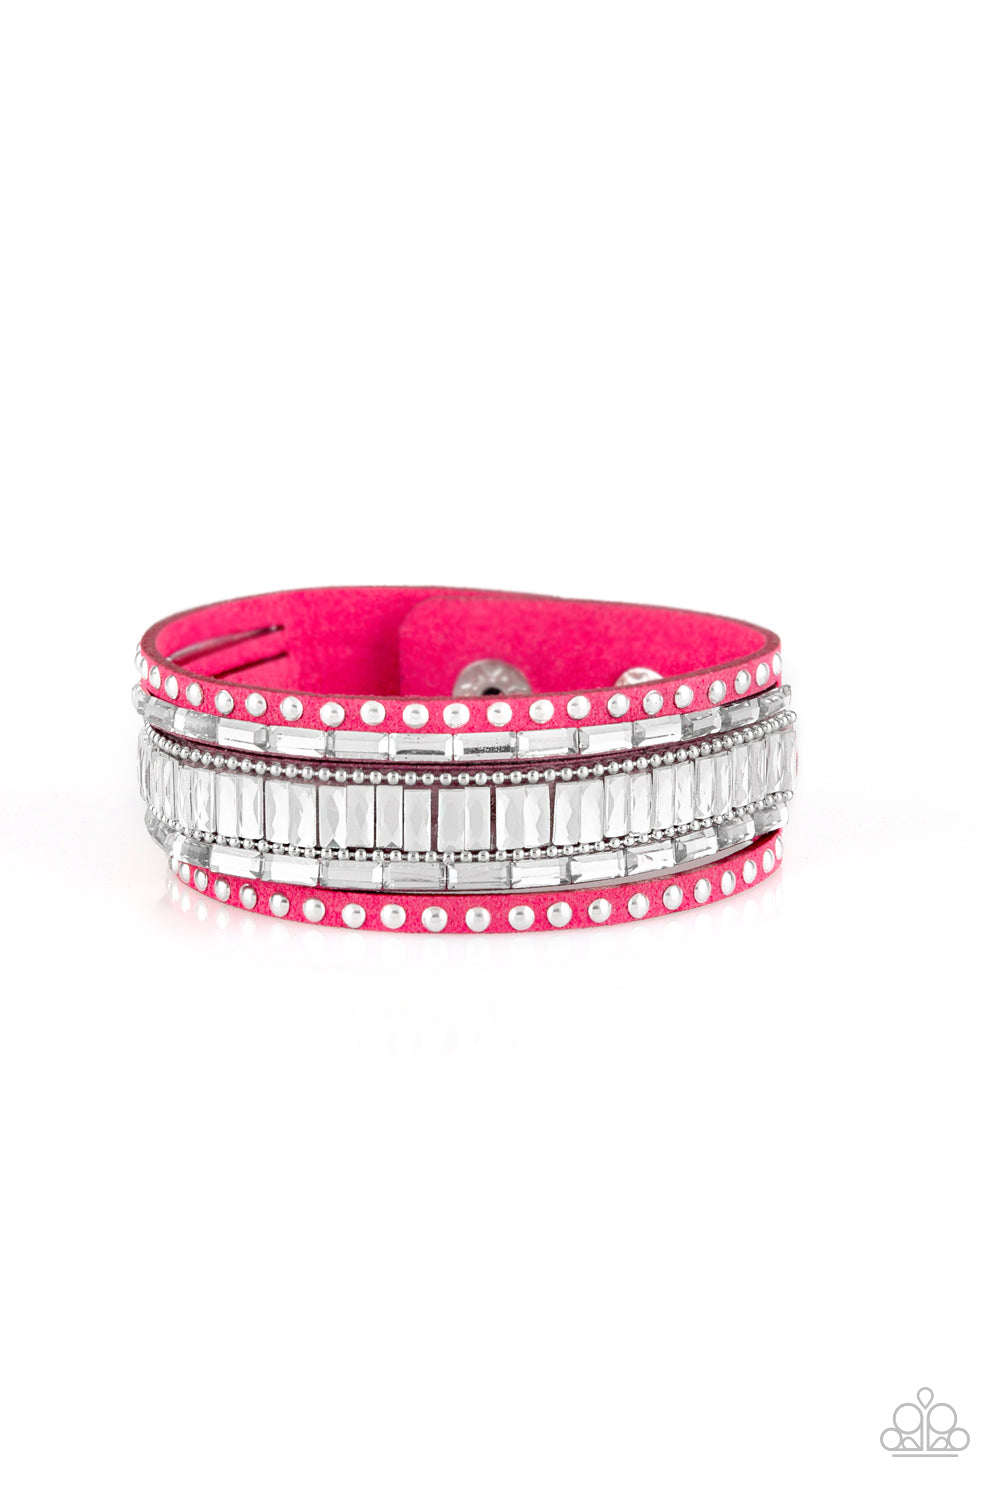 Boho bracelet Pretty pink beaded leather wrap a... - Folksy